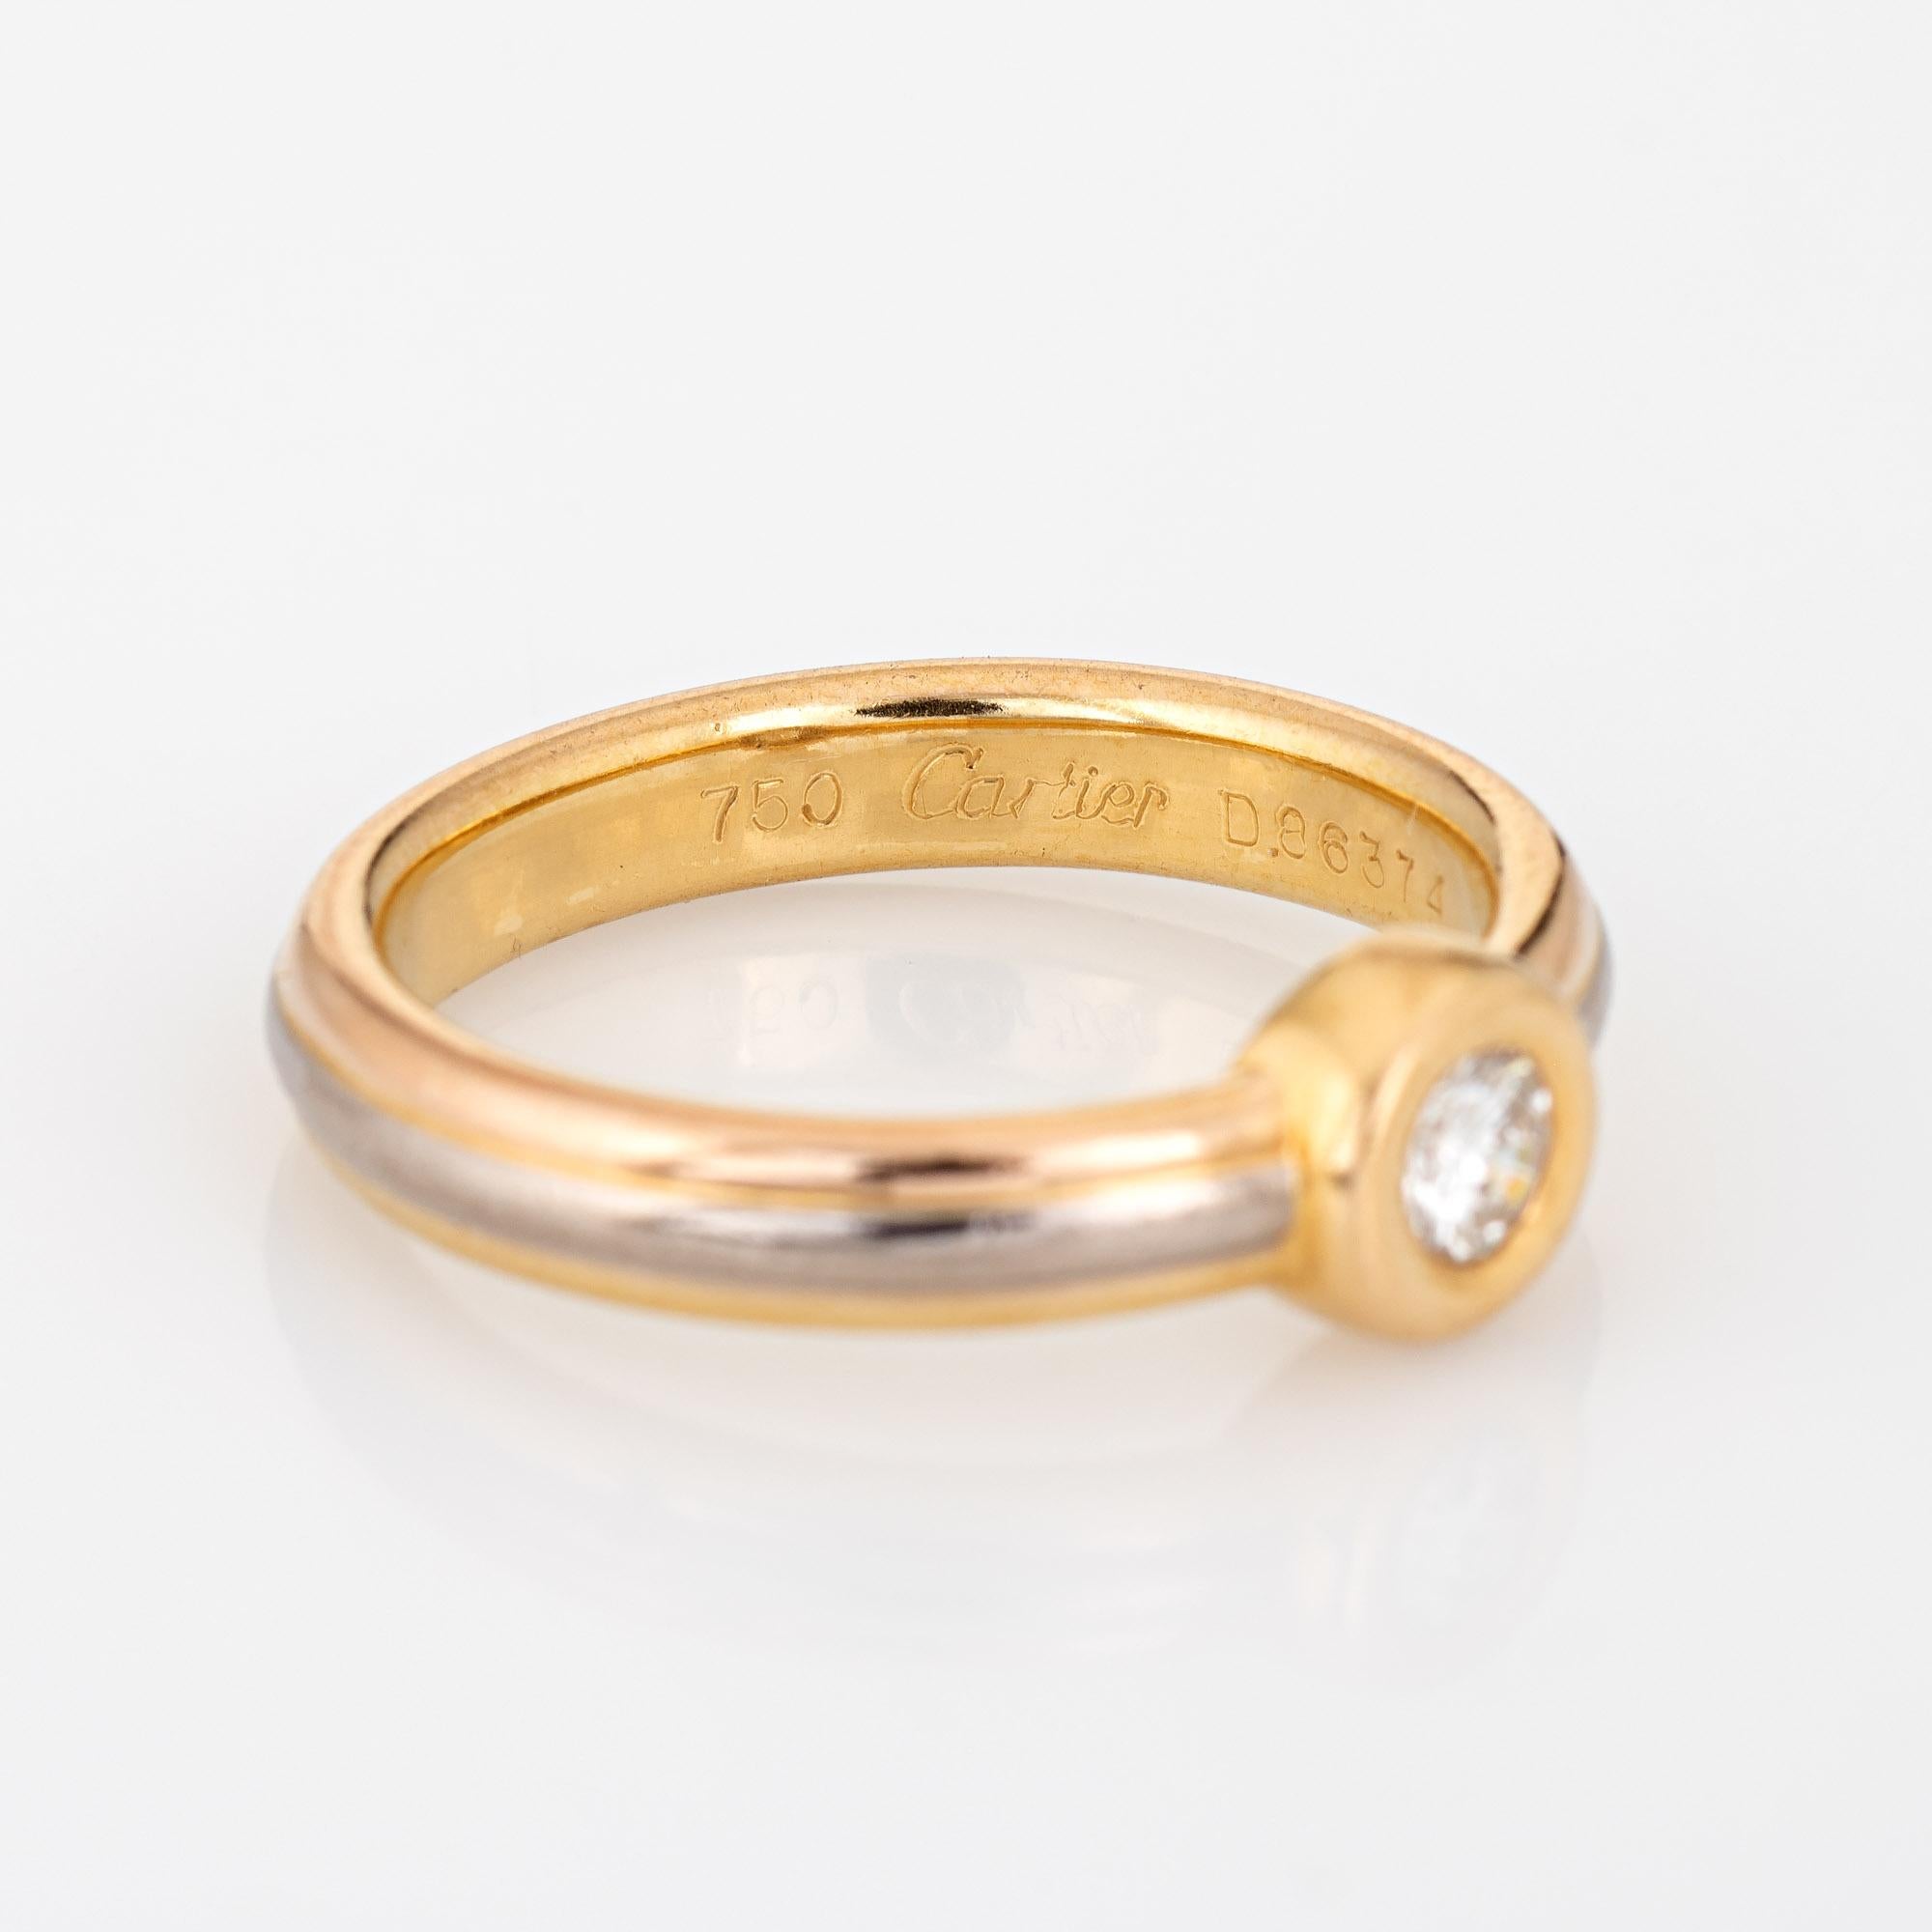 Women's Cartier Diamond Ring Vintage 1995 Trinity Band 18k Gold Jewelry